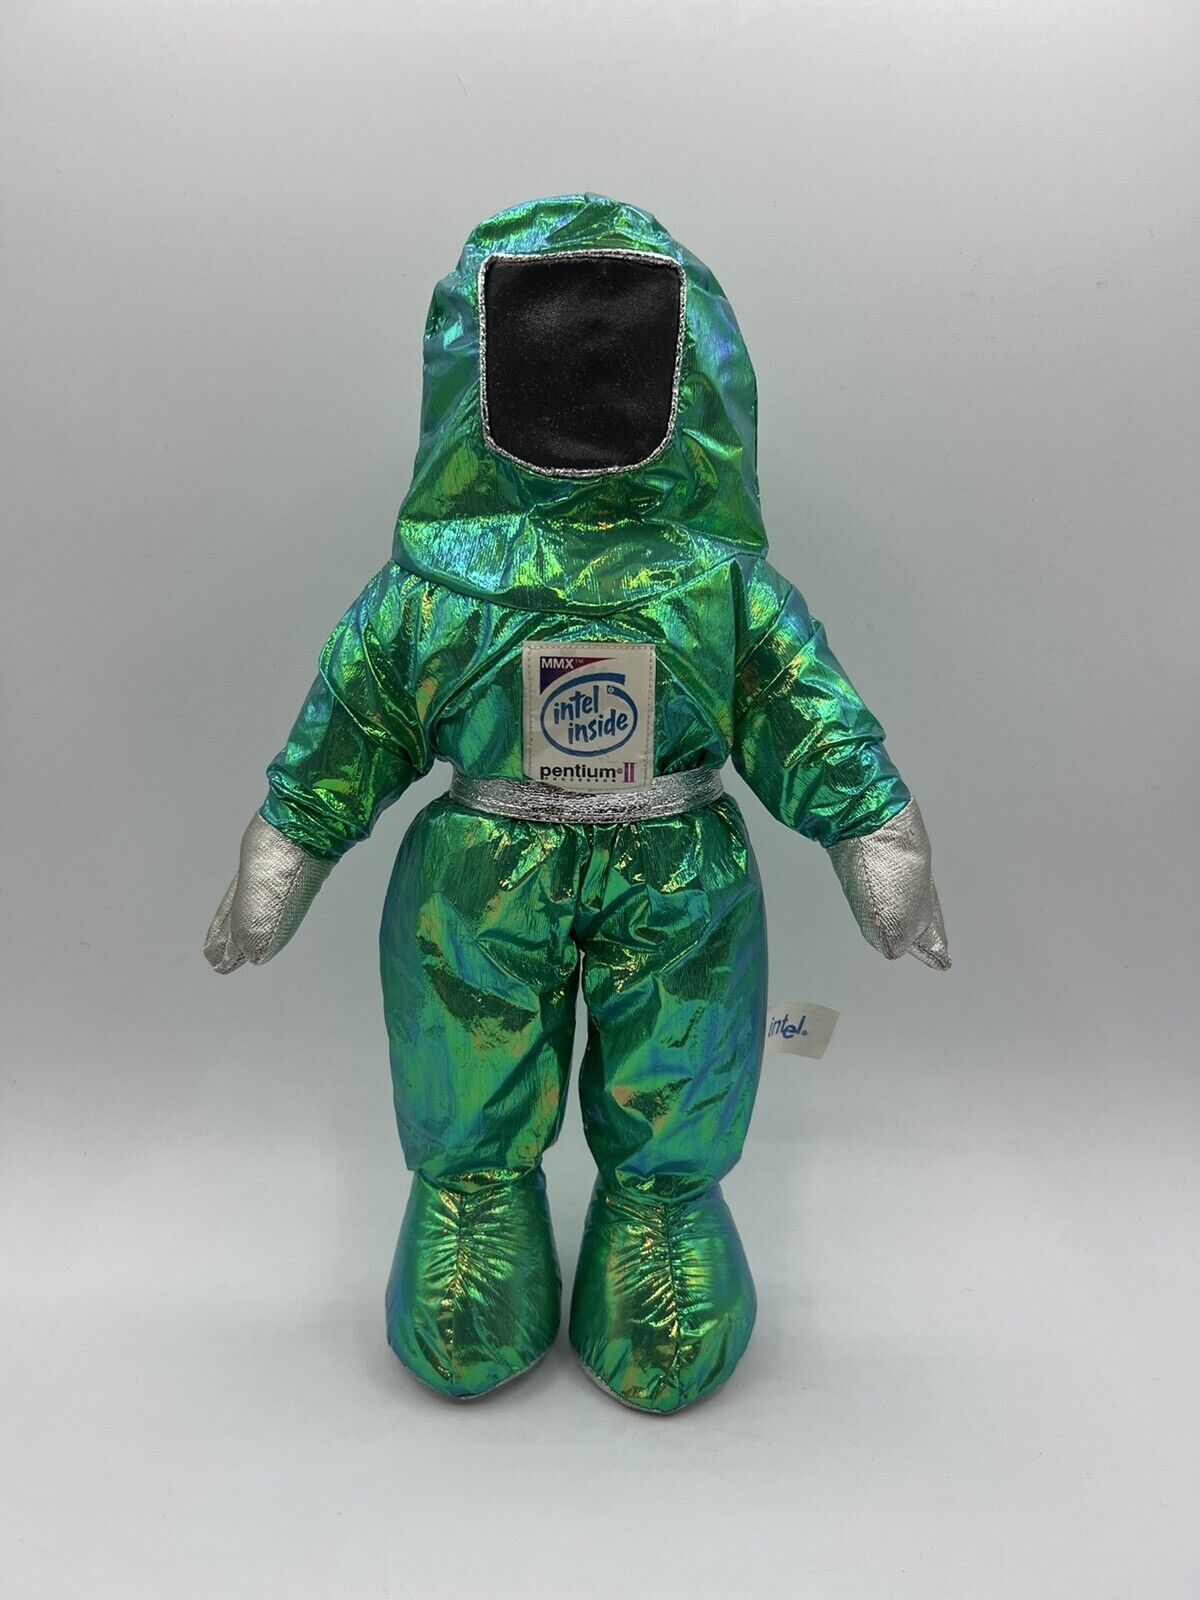 Vintage Intel Inside Space Man Bunny People Plush Standing Green Metallic 13”